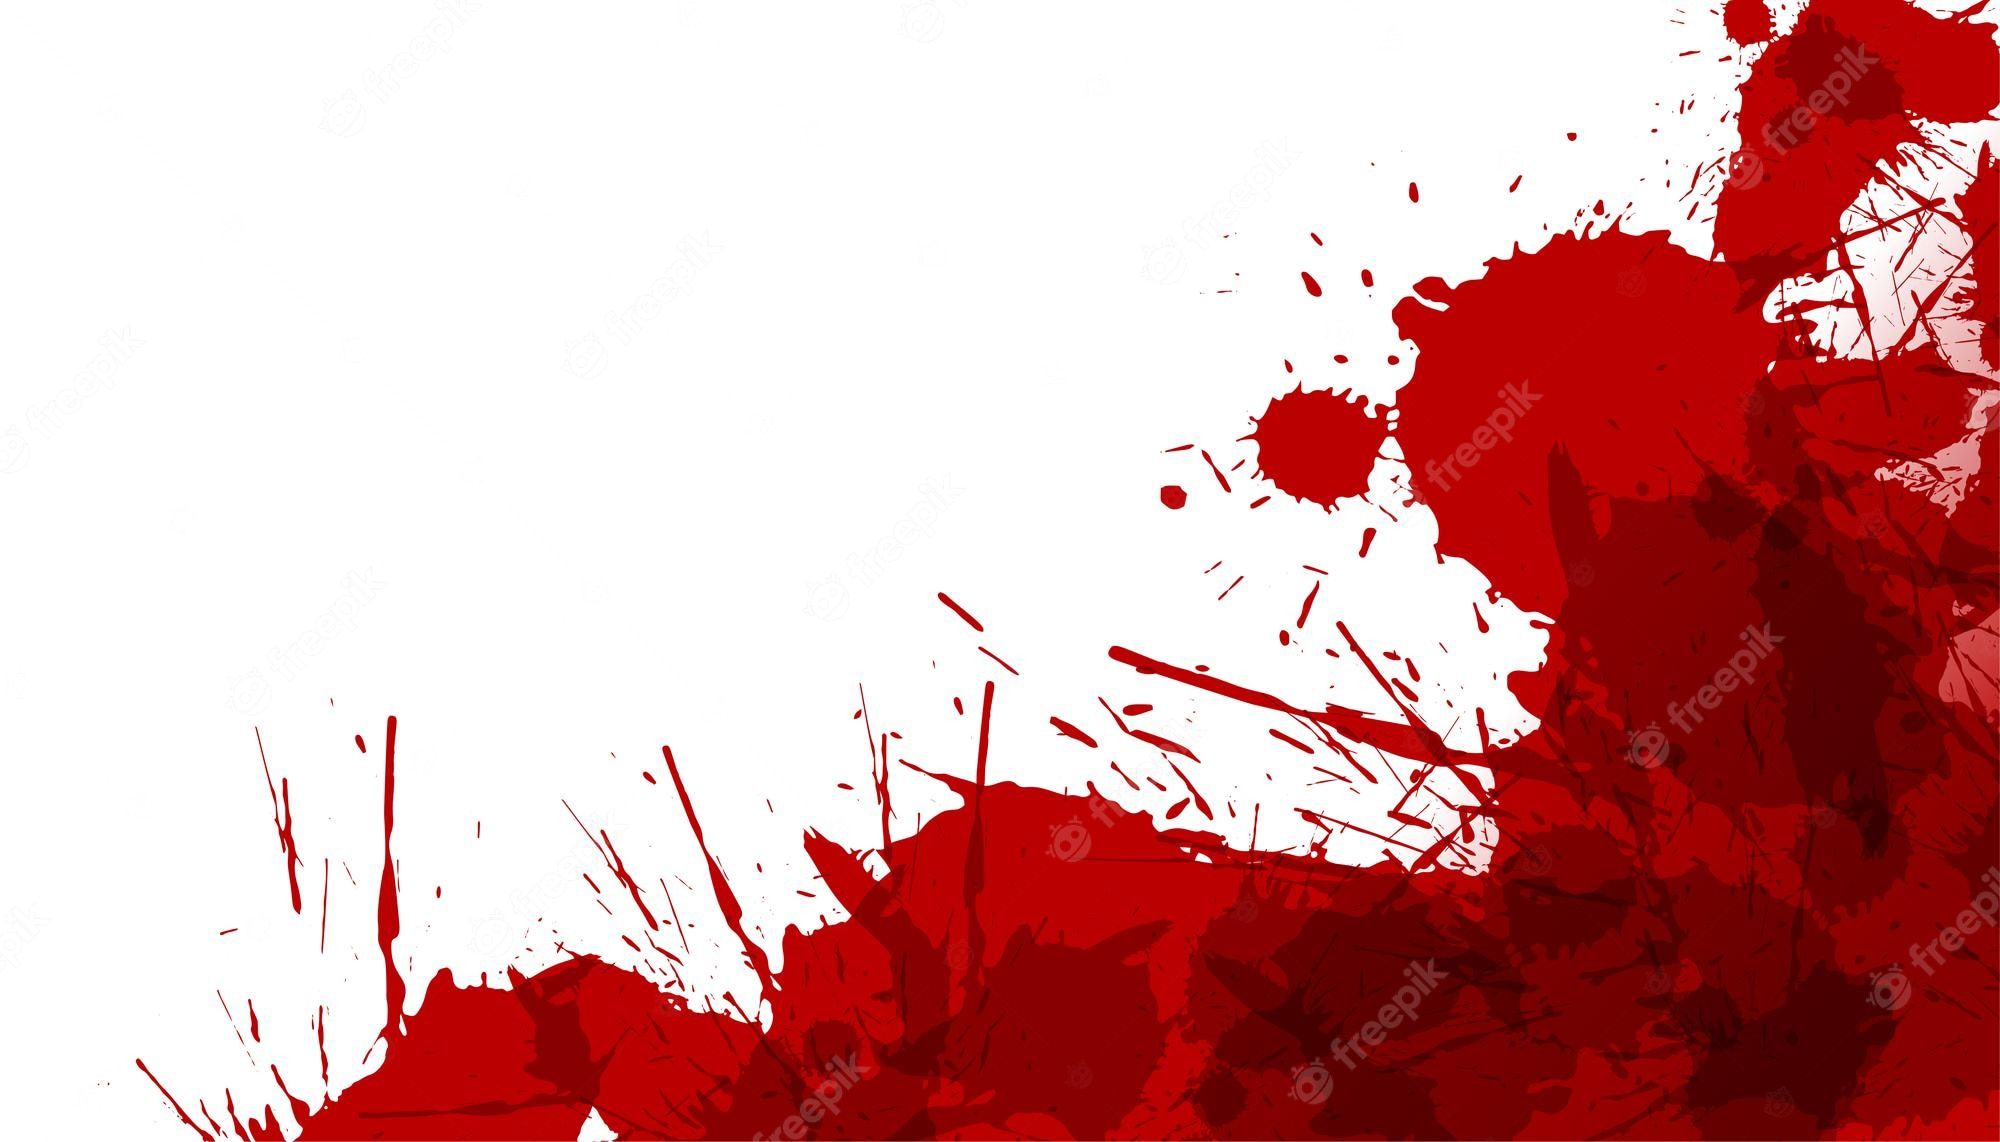 Blood splatter on a white background - Blood